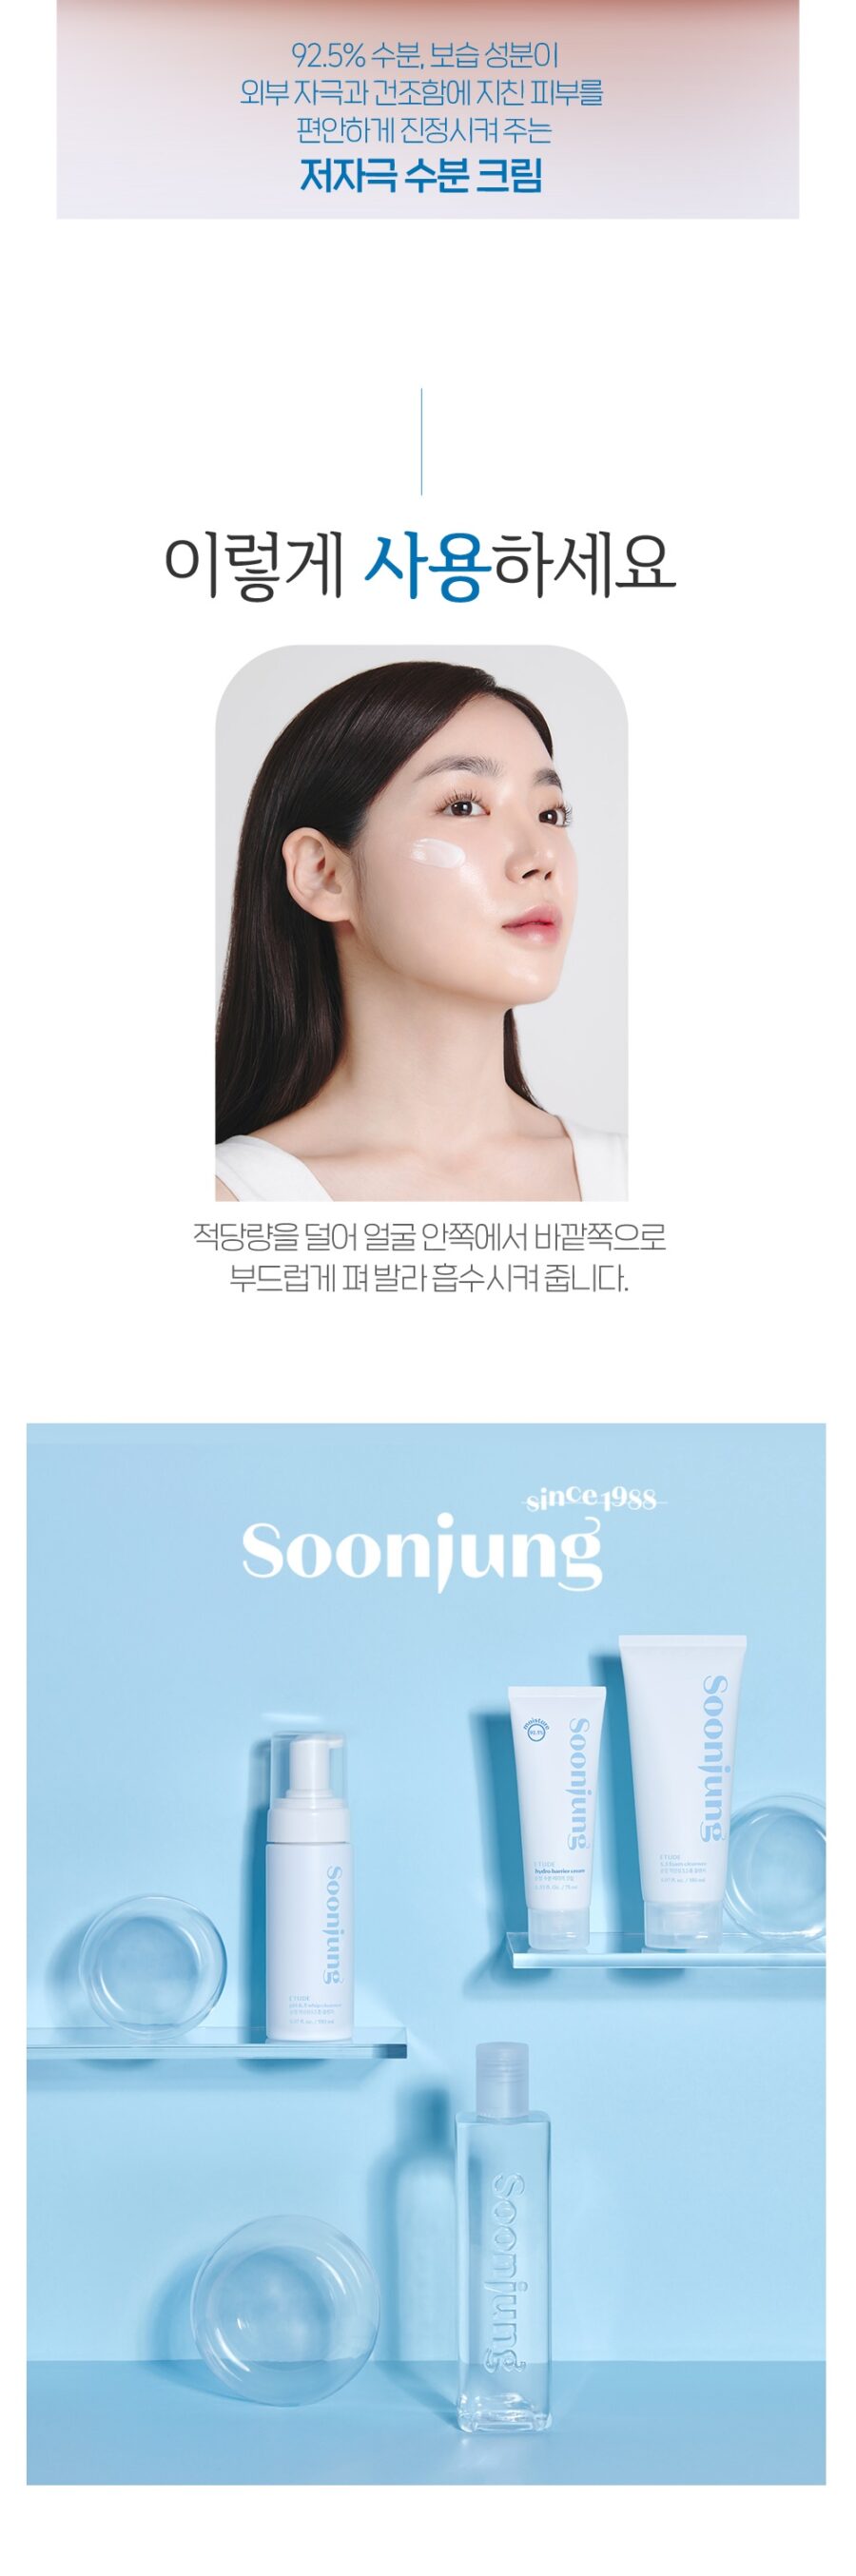 Etude House Soon Jung Hydro Barrier Cream korean skincare product online shop malaysia china macau3